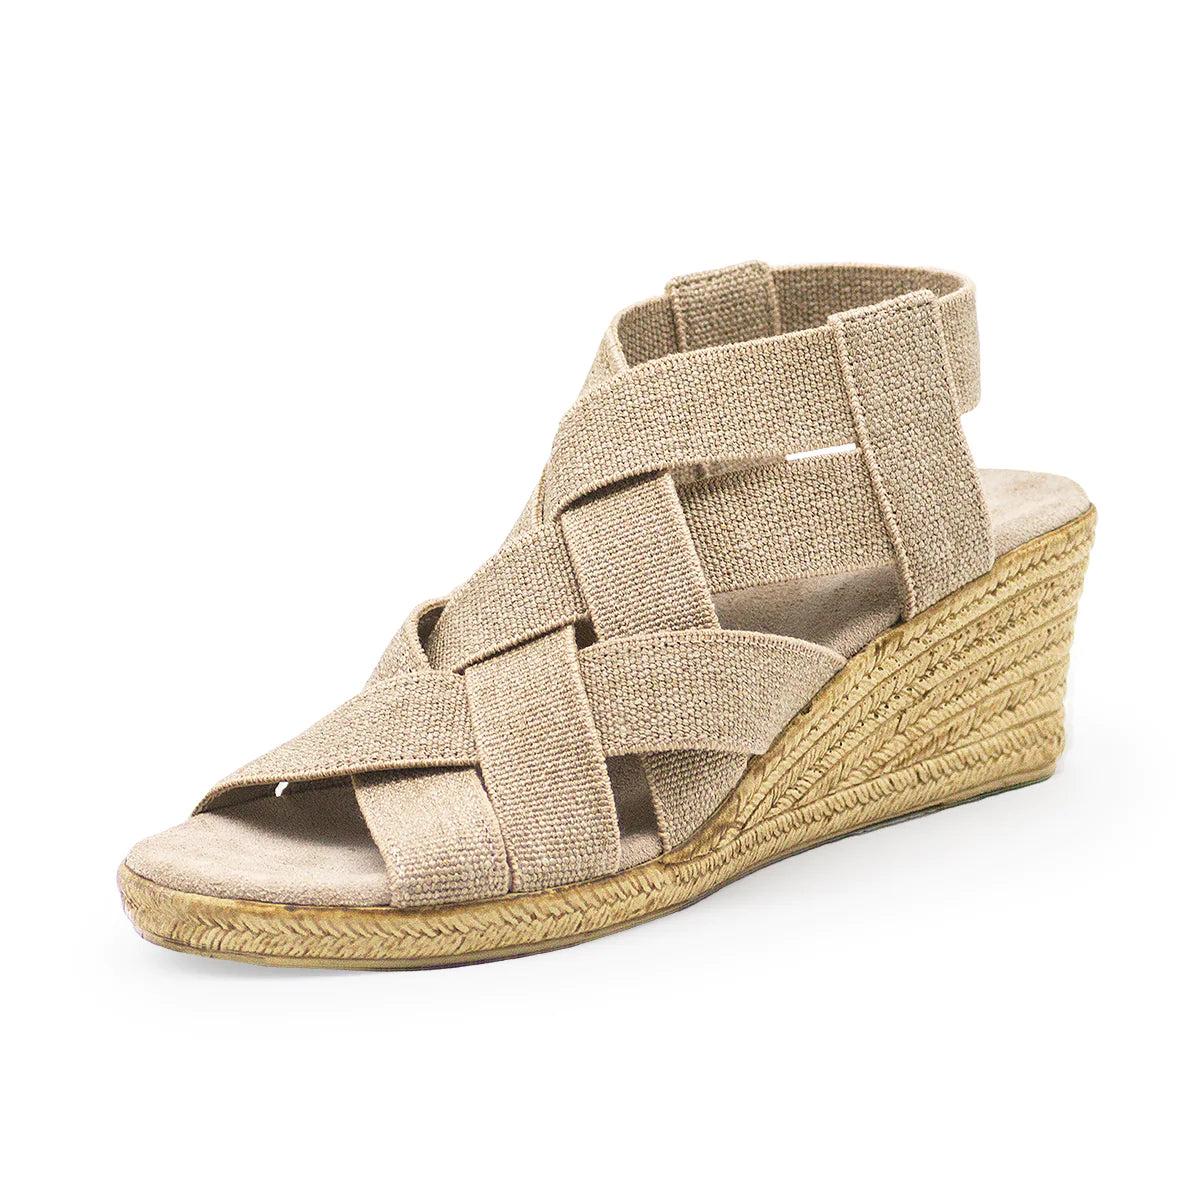 Charleston Shoe Co. Ravanel Strappy Wedge Sandal – Cute & Comfy